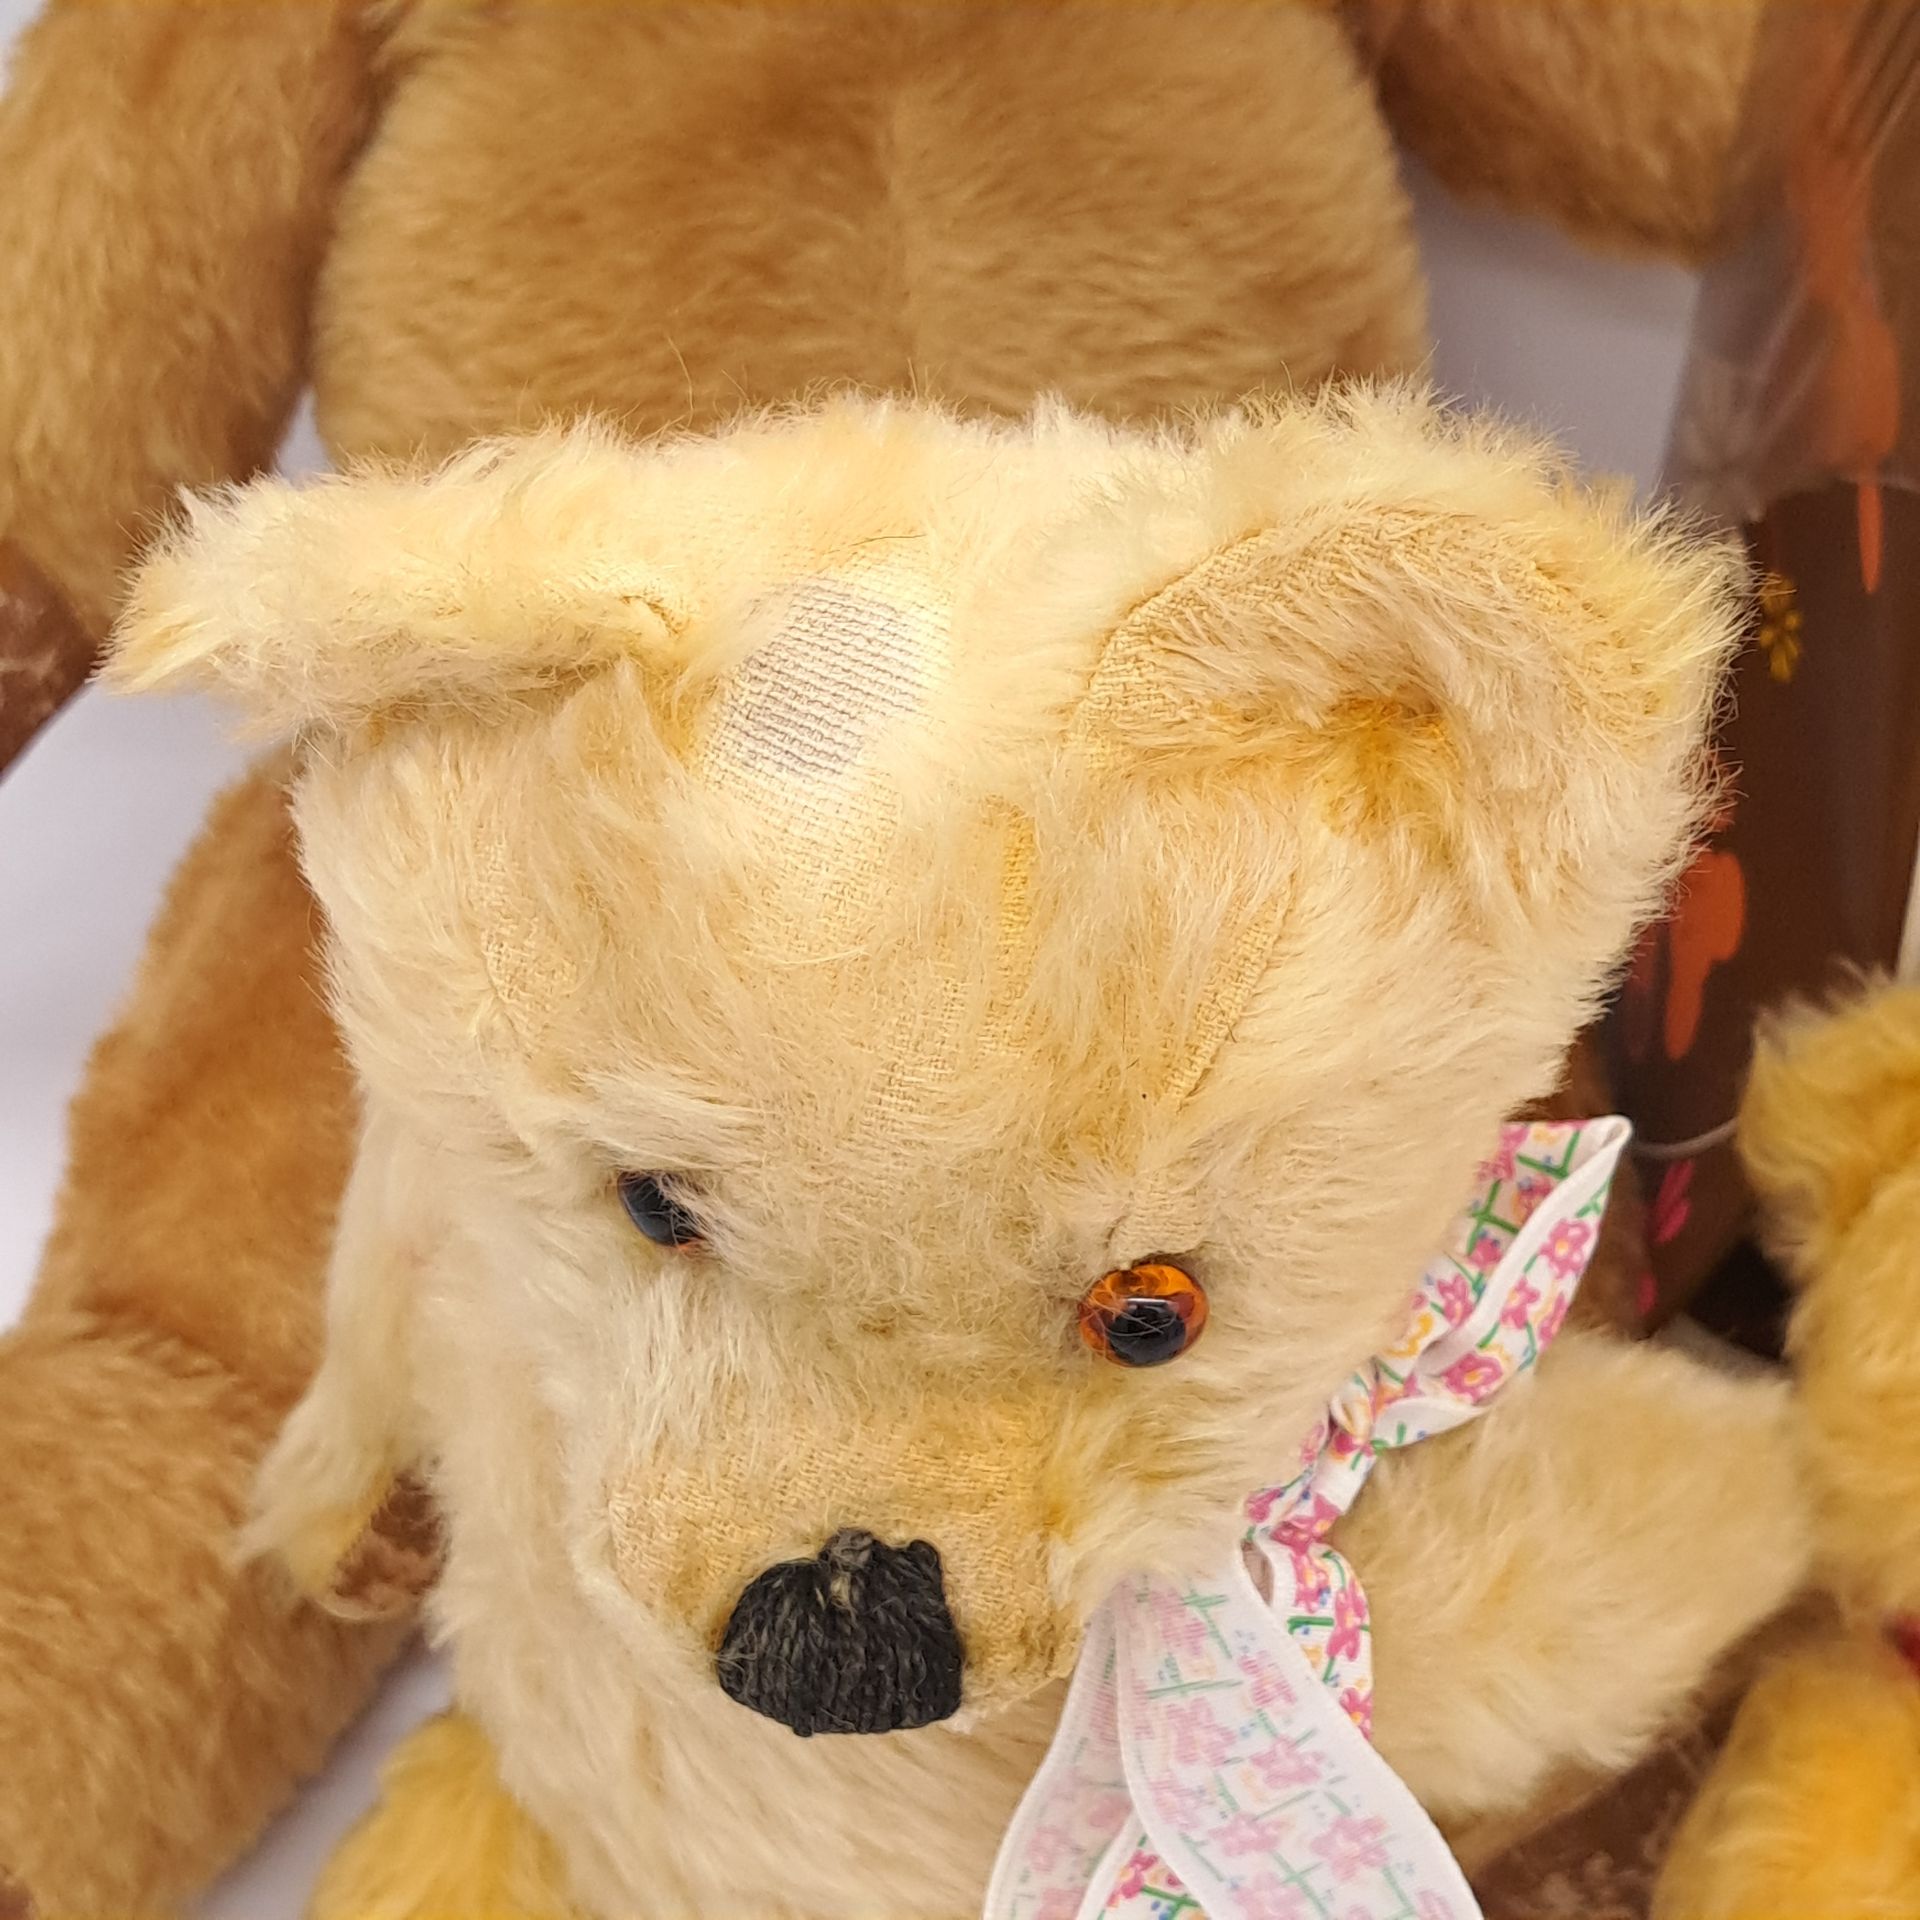 Tara Toys (Irish) assortment of teddy bears